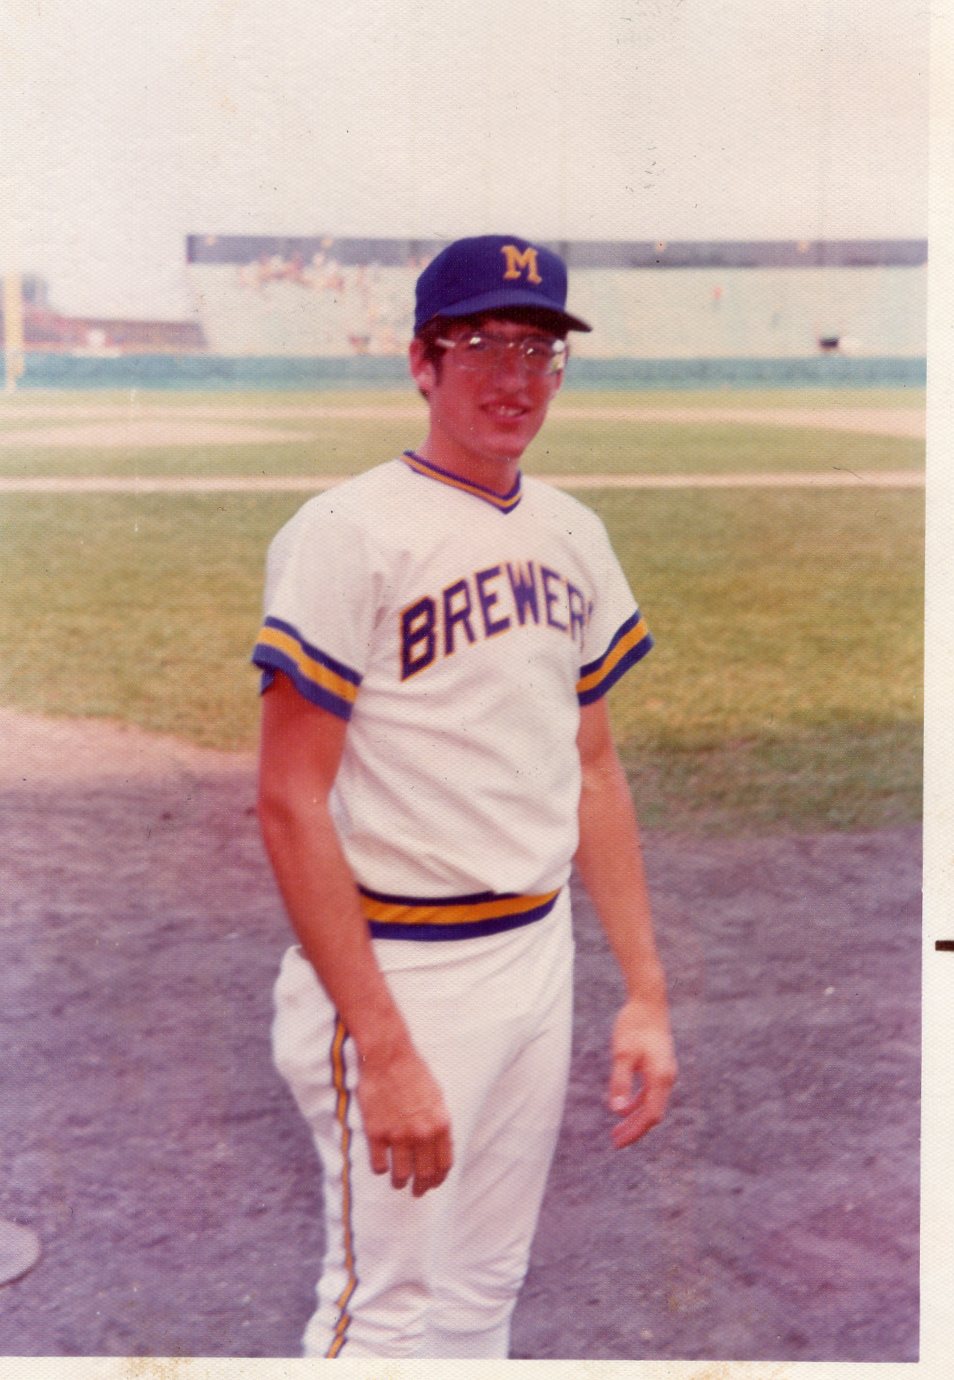 Patrick McBride poses in a Milwaukee Brewers uniform